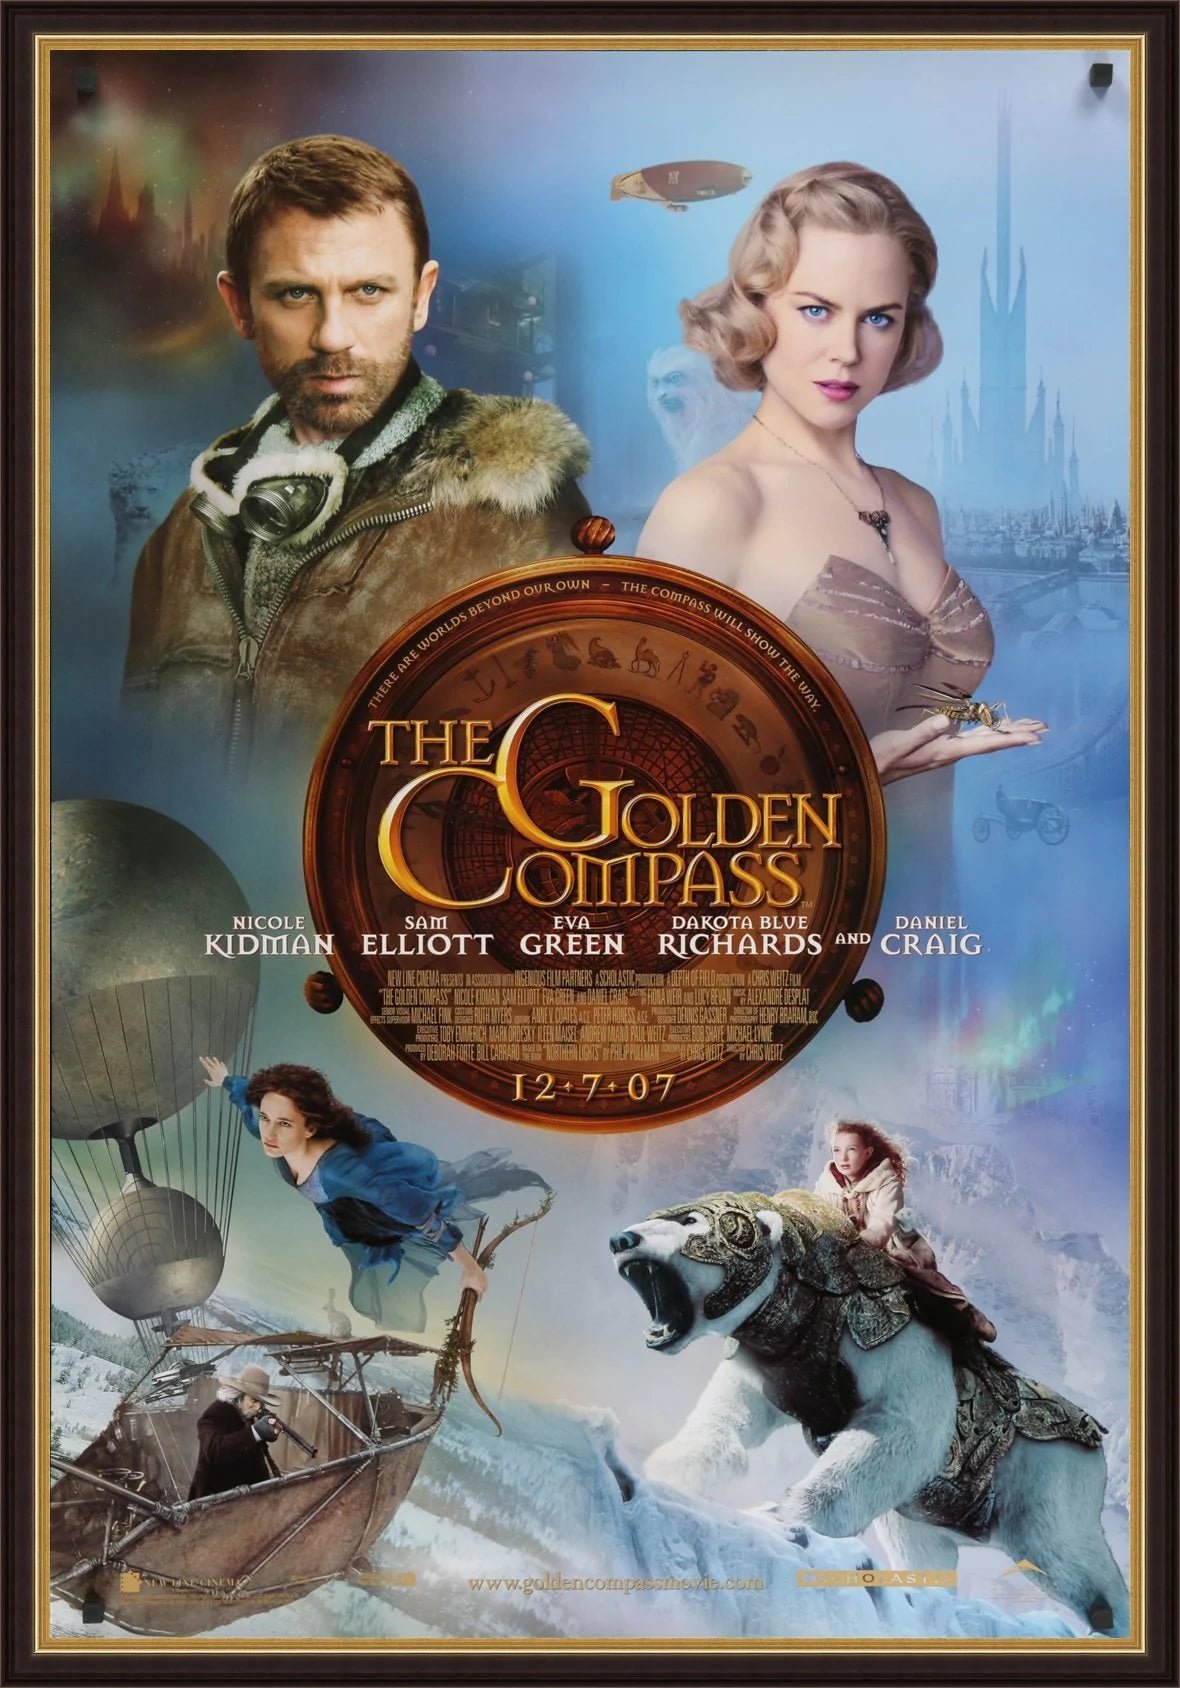 An original movie / film poster for The Golden Compass